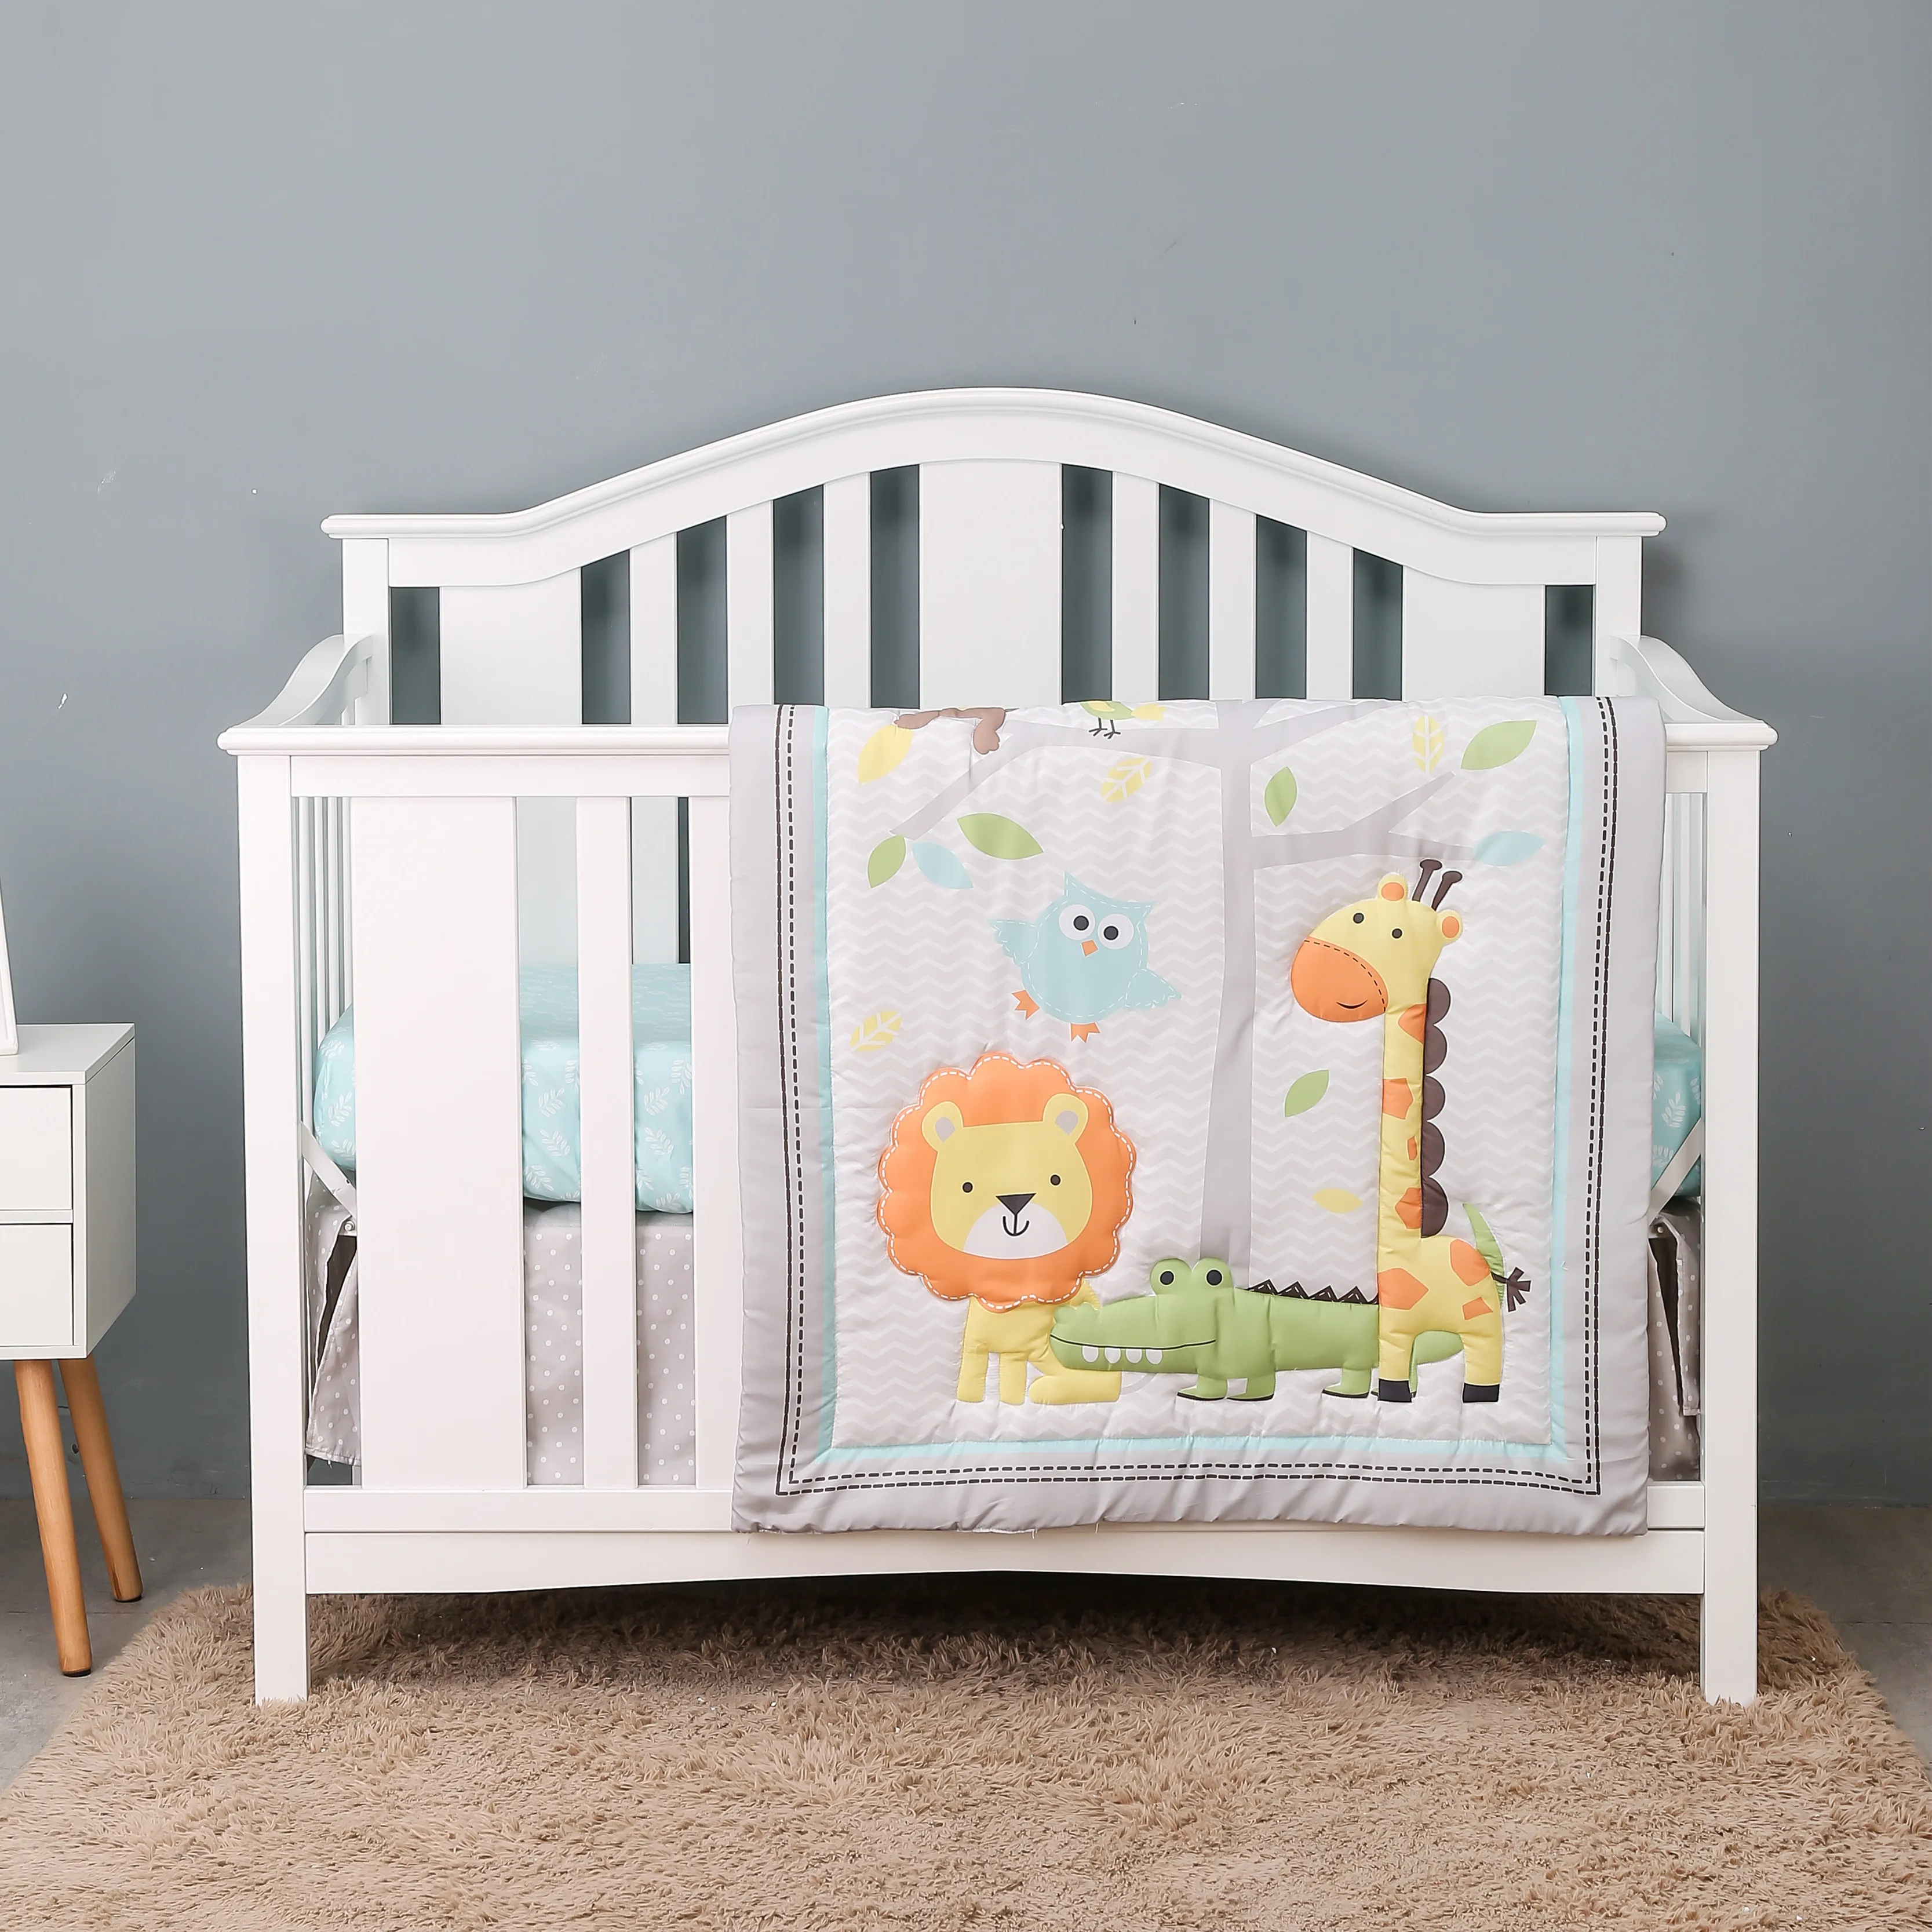 3 pcs Baby Crib Bedding Set for Boys and Girls hot sale including quilt, crib sheet, crib skirt